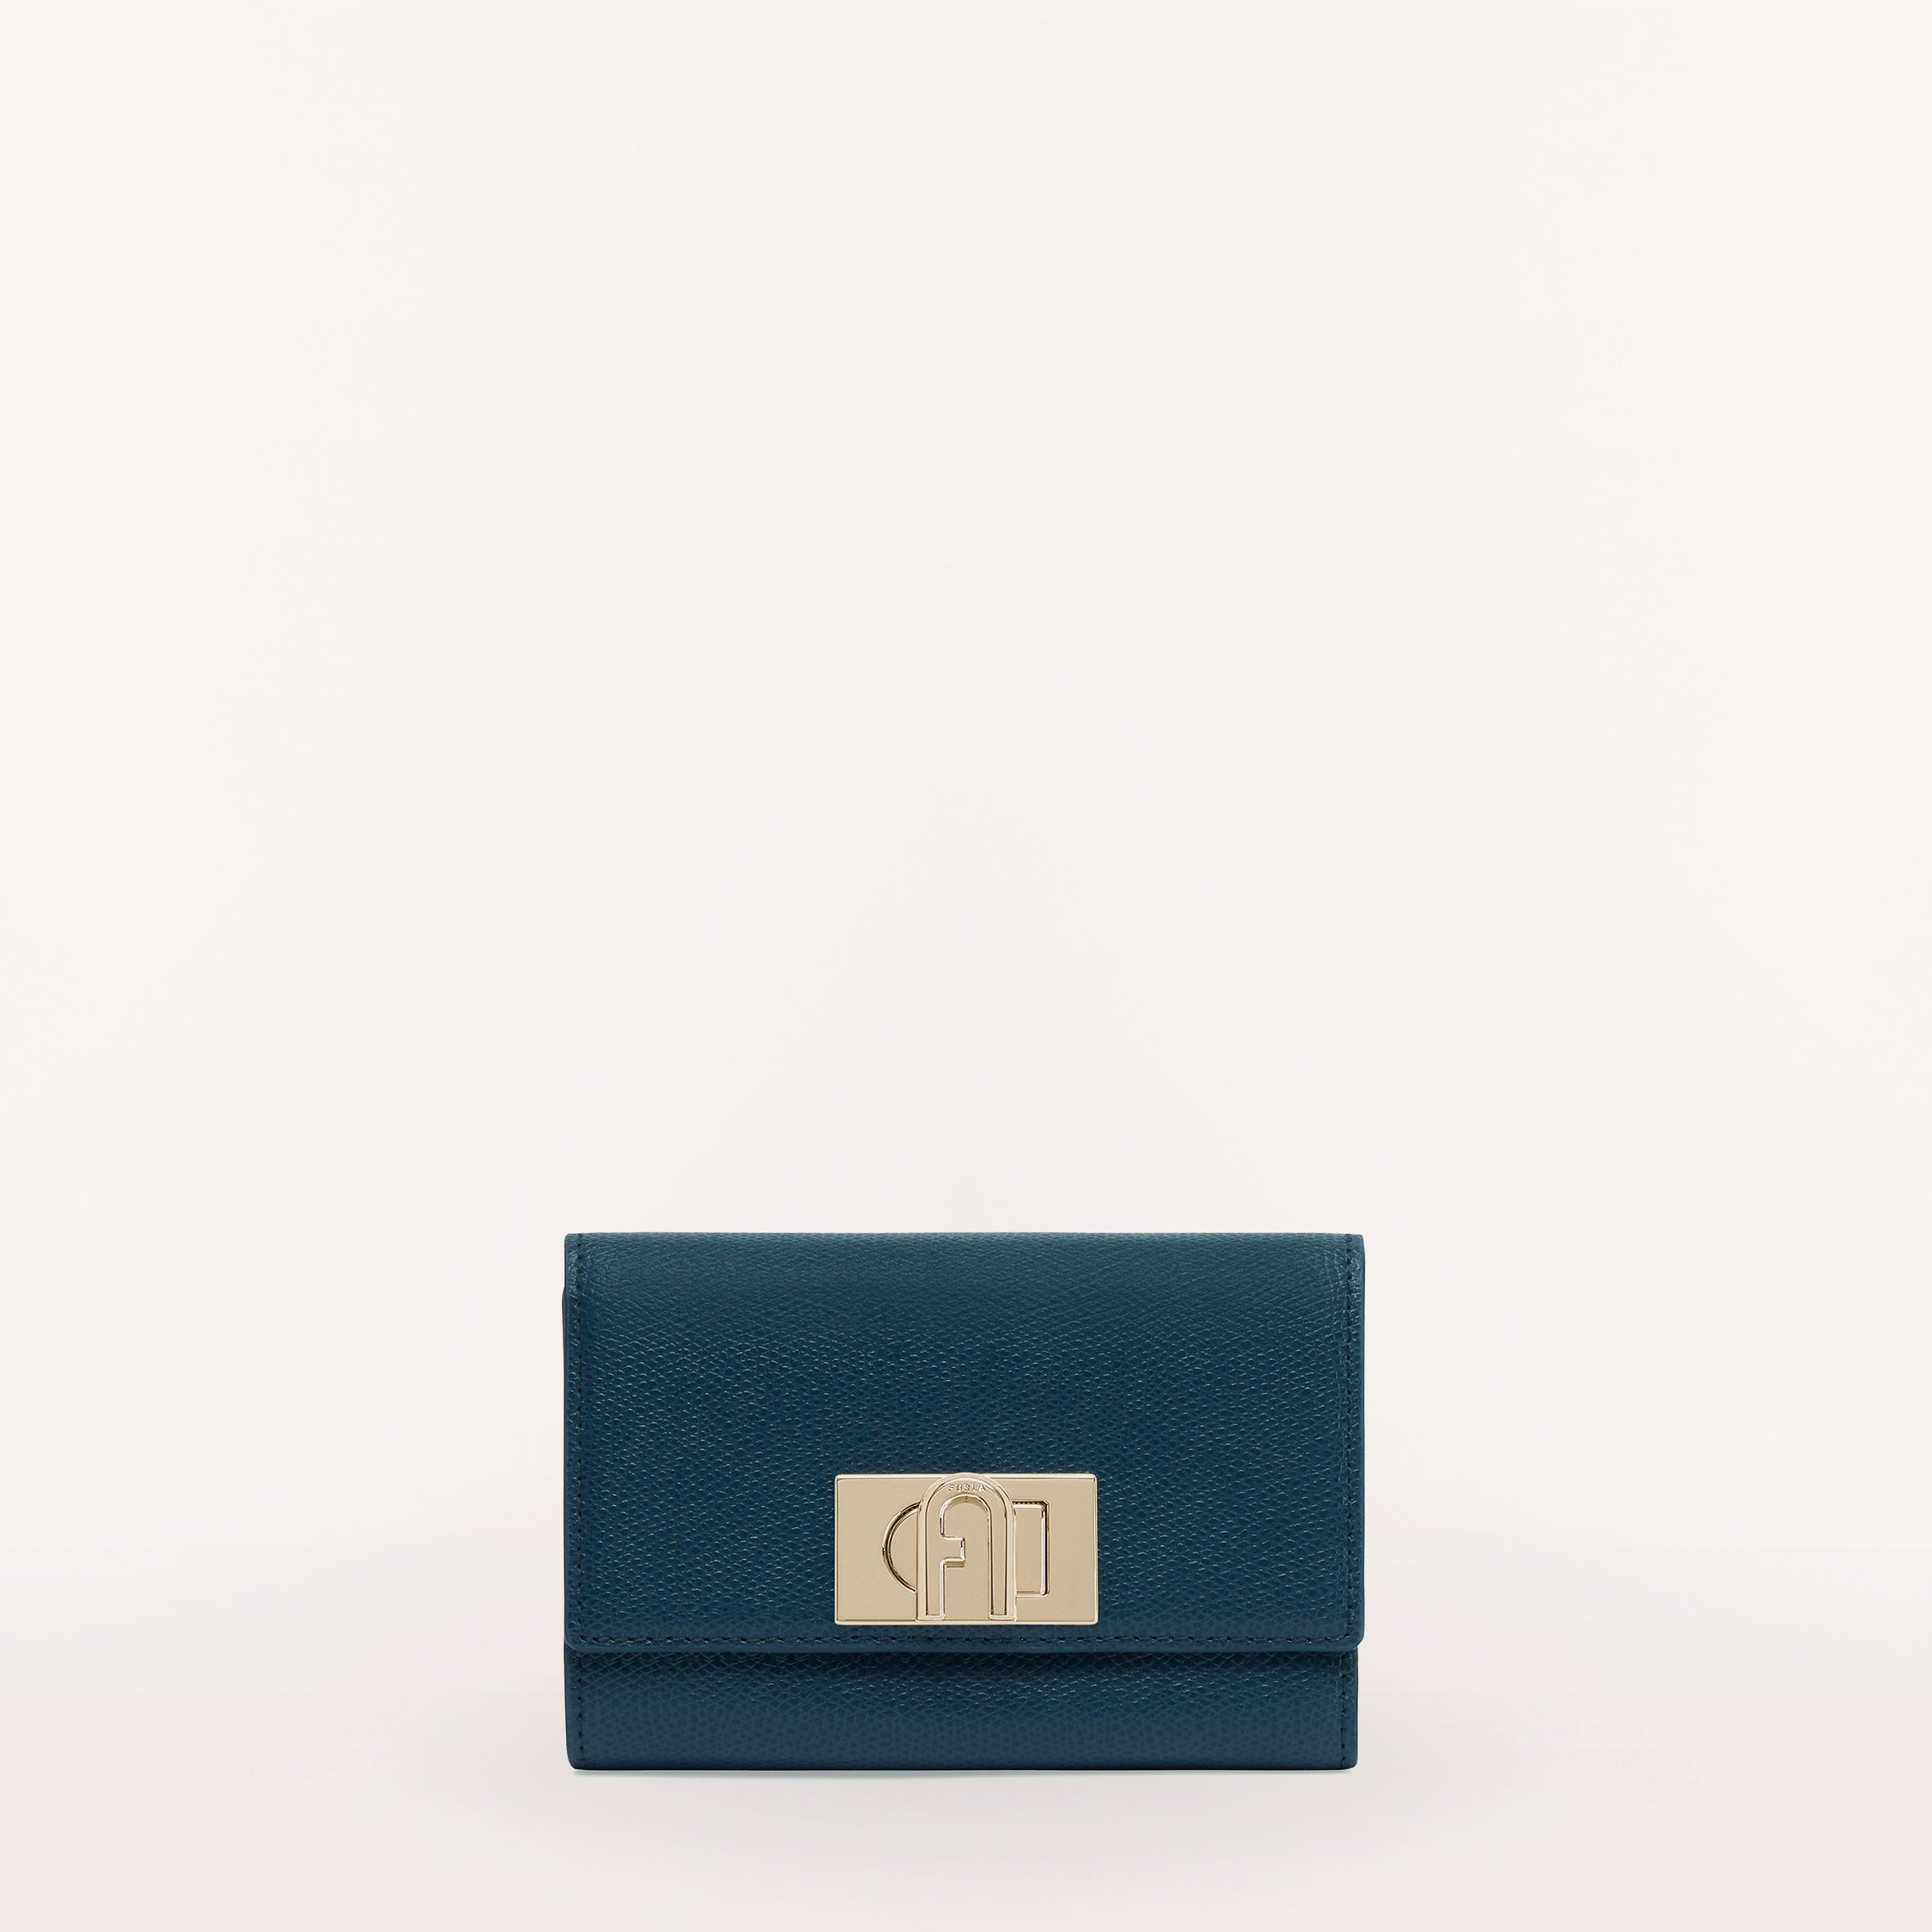 Furla 1927 Compact Wallet, Blu Jay, Ares